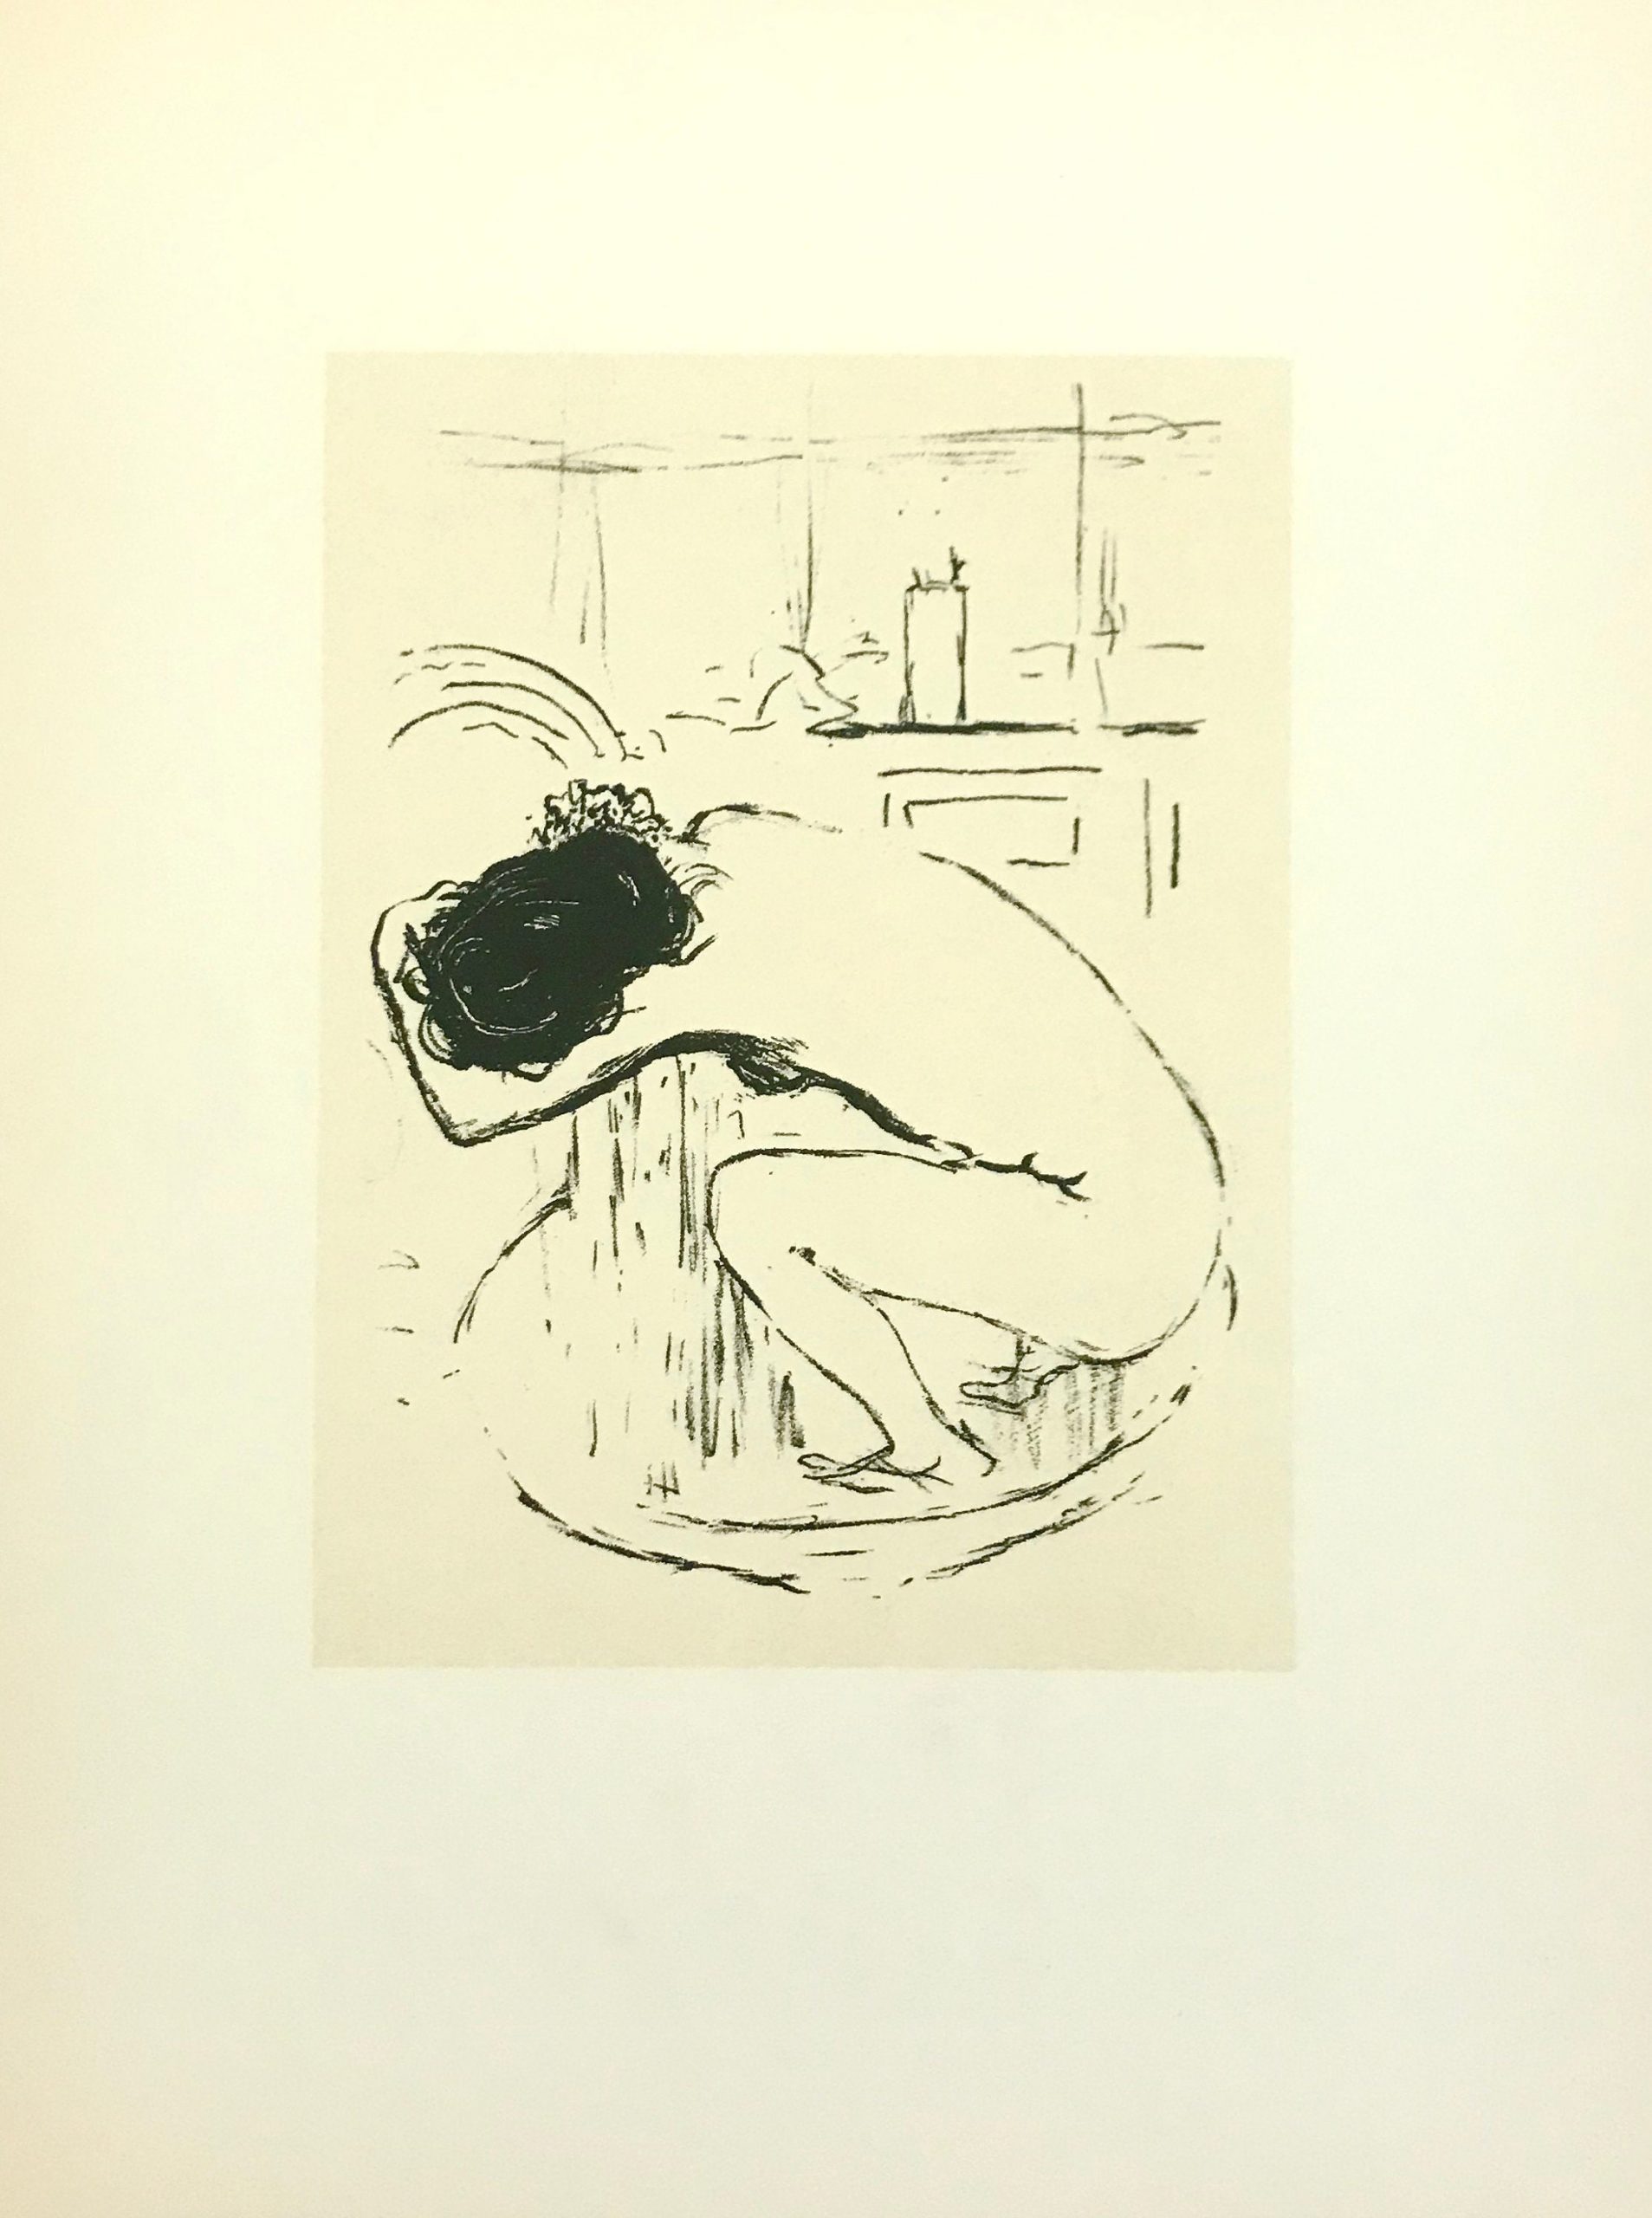 Pierre Bonnard Lithograph 37, Le Tub 1952